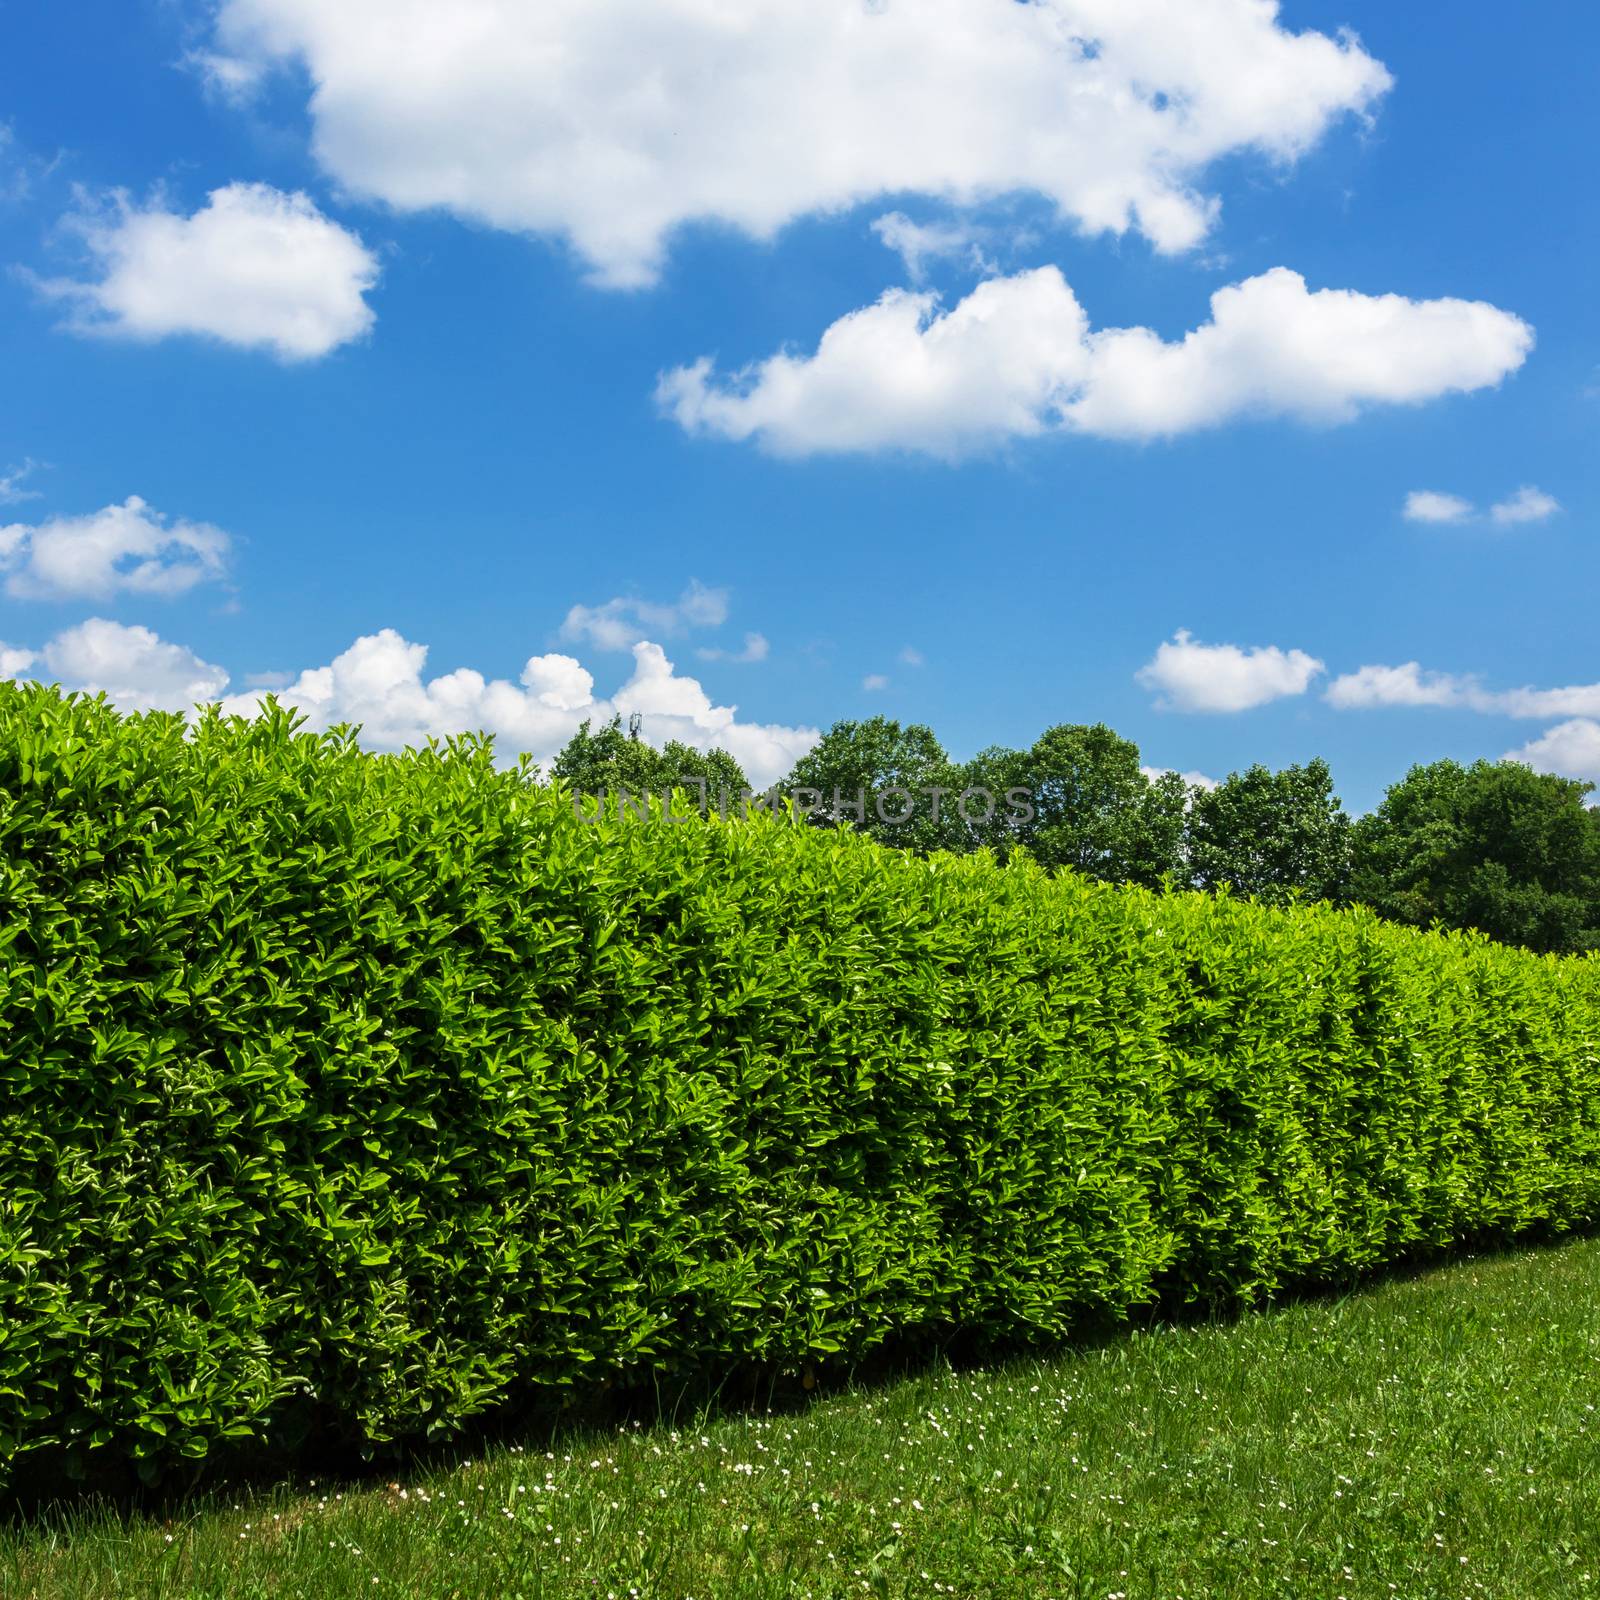 Hedge against amazing sky by germanopoli